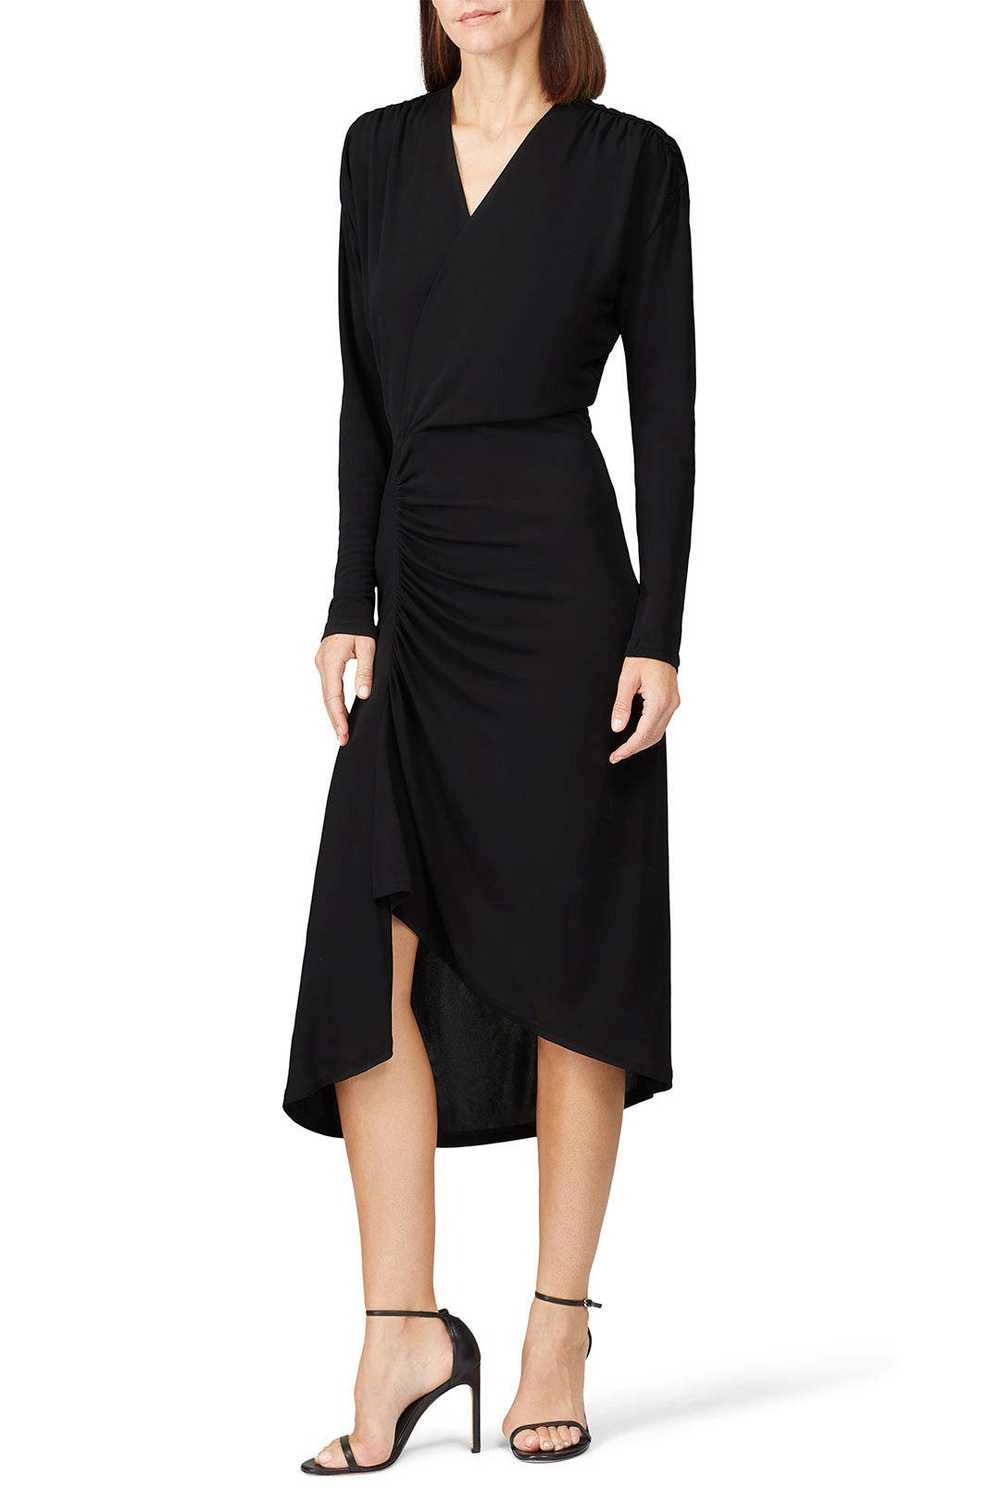 Atlein Black Long Sleeve Ruched Dress - image 1